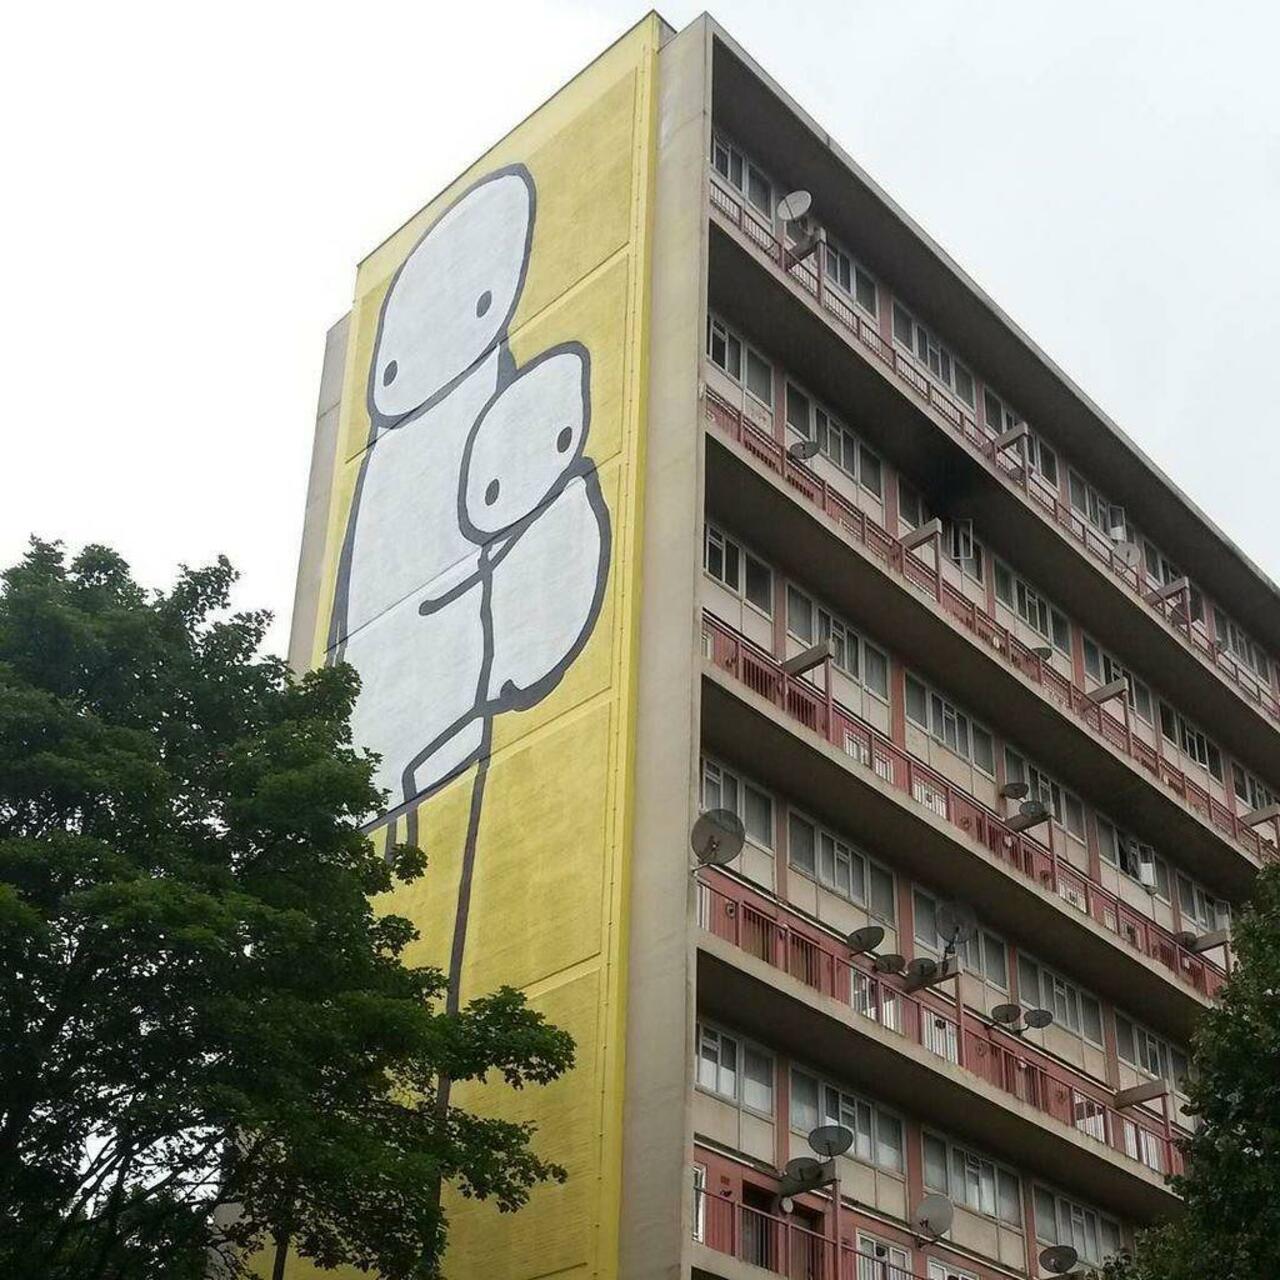 RT @artpushr: via #flern310 "http://bit.ly/1OlKklI" #graffiti #streetart http://t.co/B04oahOQ9e